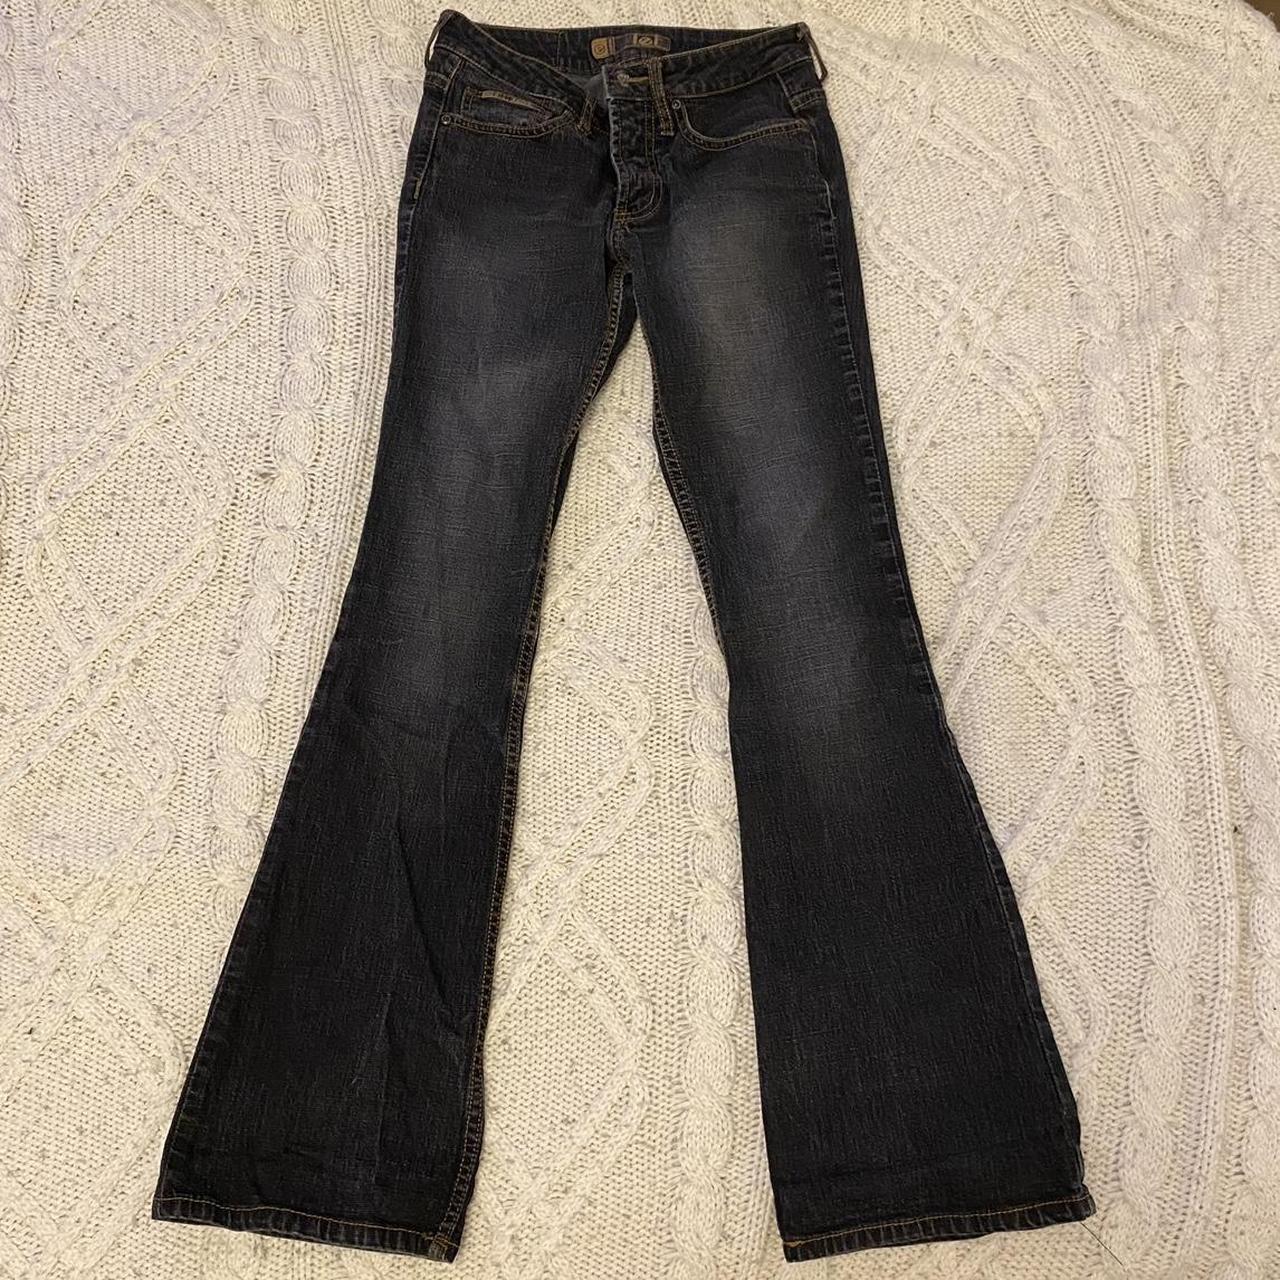 low rise bootcut jeans size 0 - Depop